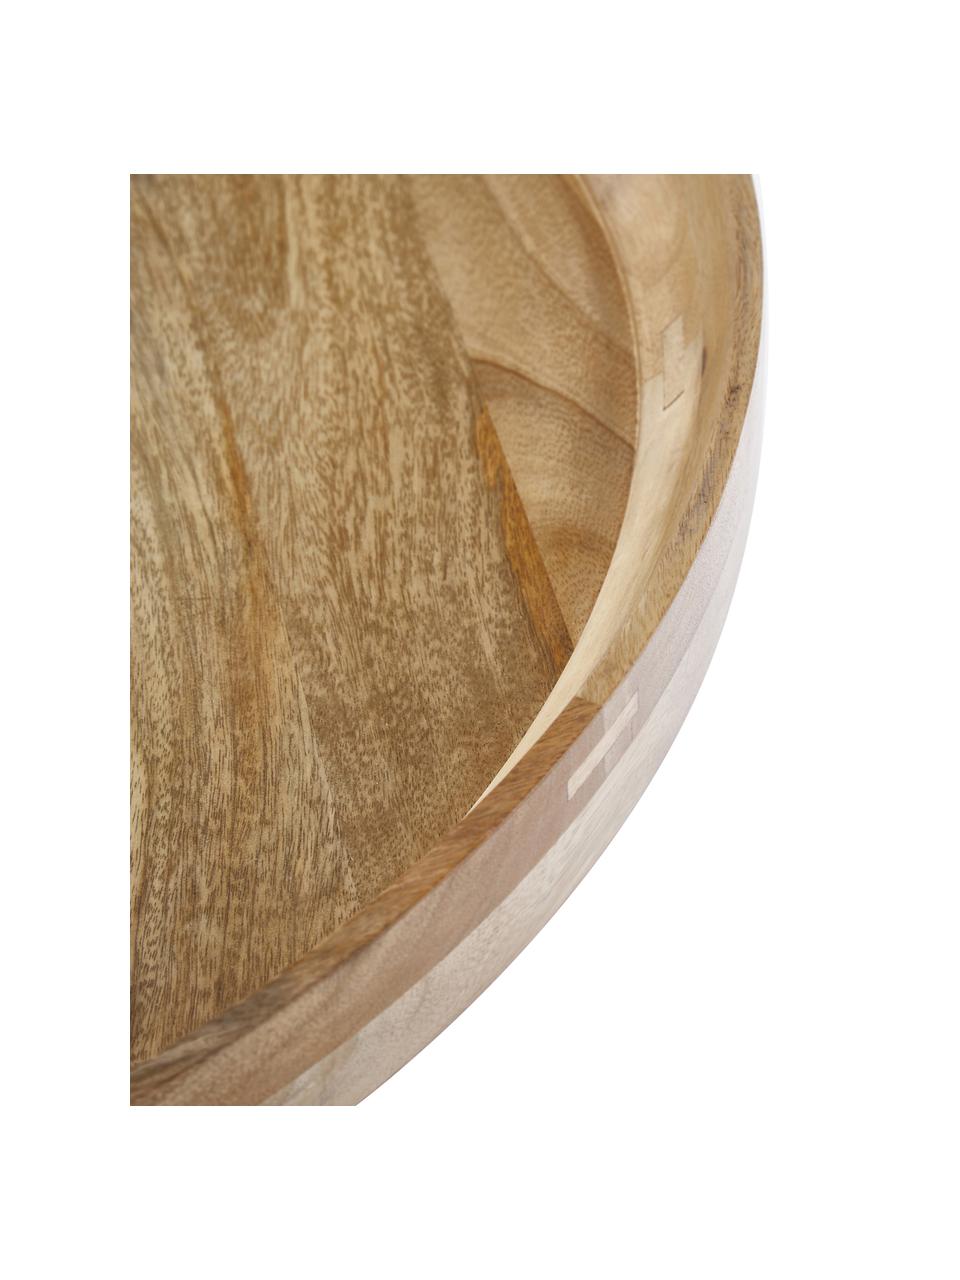 Mesa de centro Bol Table, Tablero: madera de mango, curtido, Patas: acero con pintura en polv, Marrón, Ø 75 x Al 38 cm